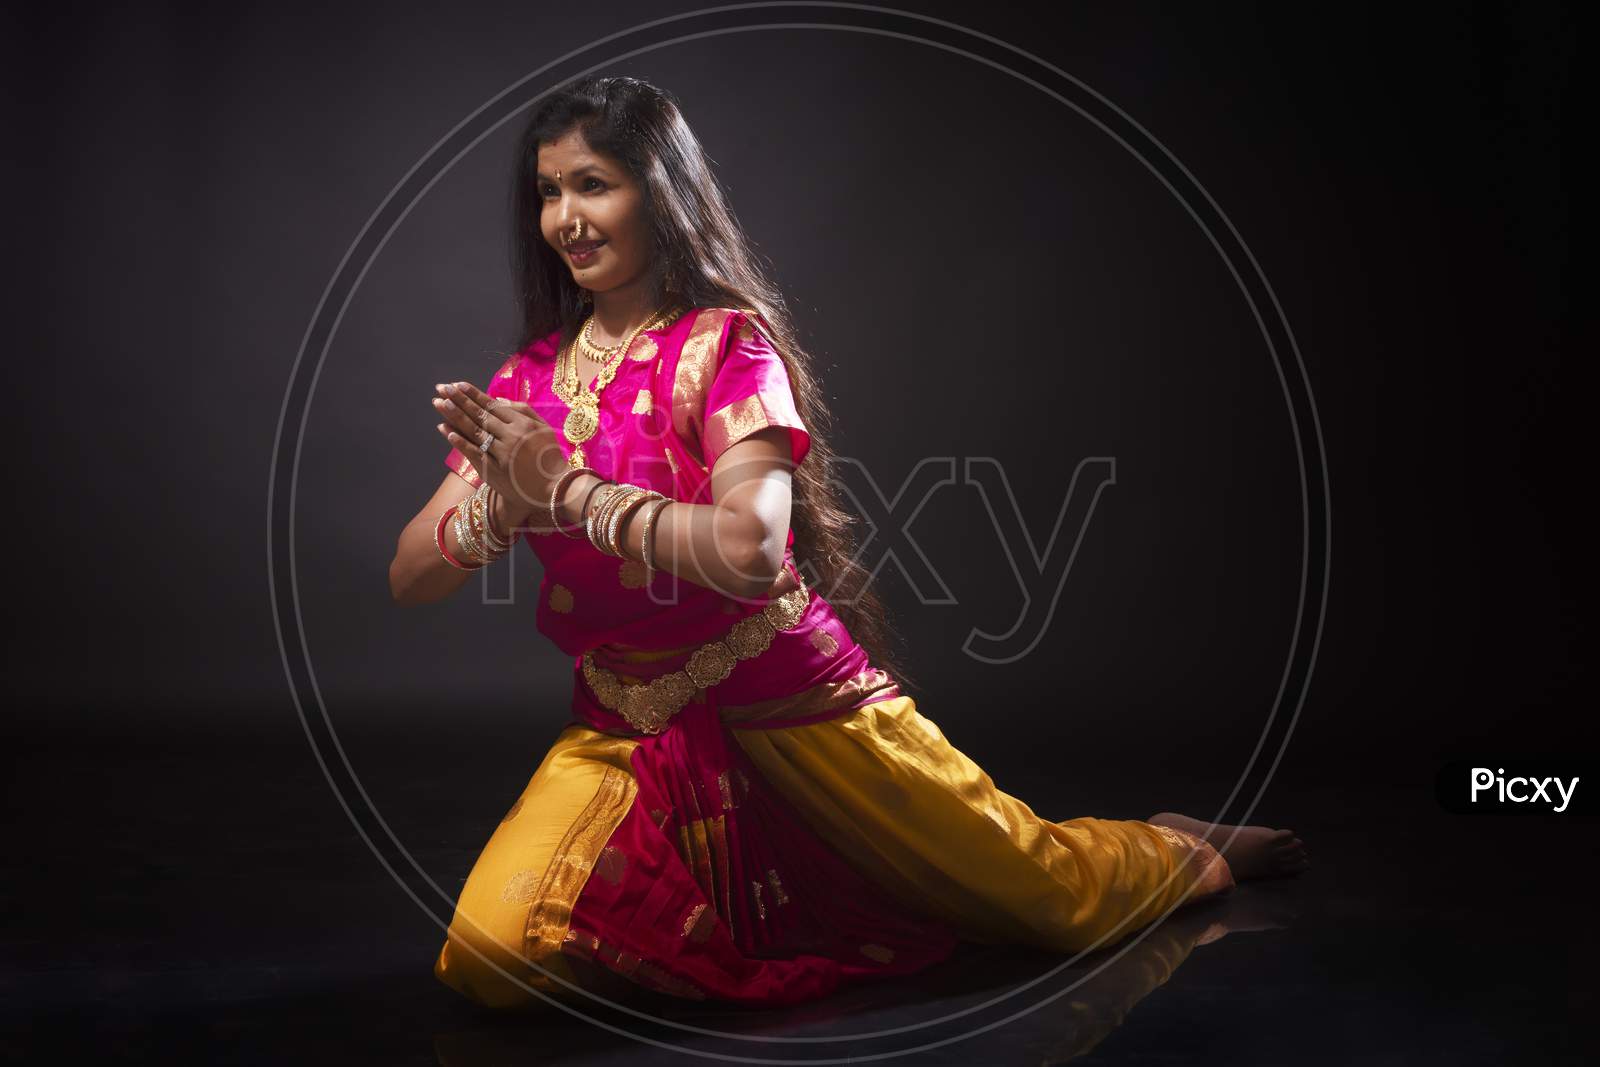 Indian woman performing classical Bharatanatyam dance